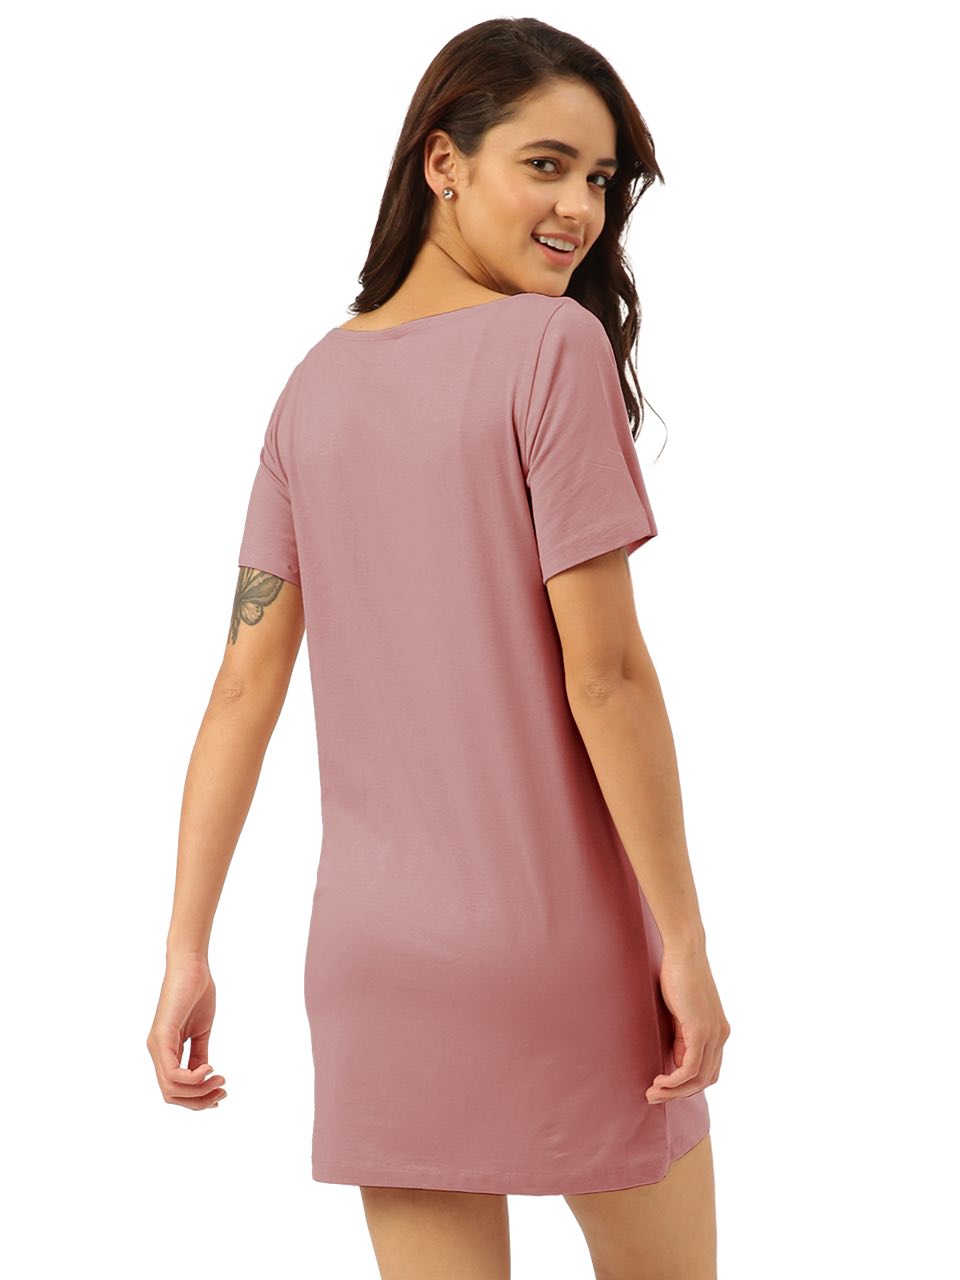 Shirt Dress For Women - Buy Blue Abstract Print Shirt Dress Online In India.